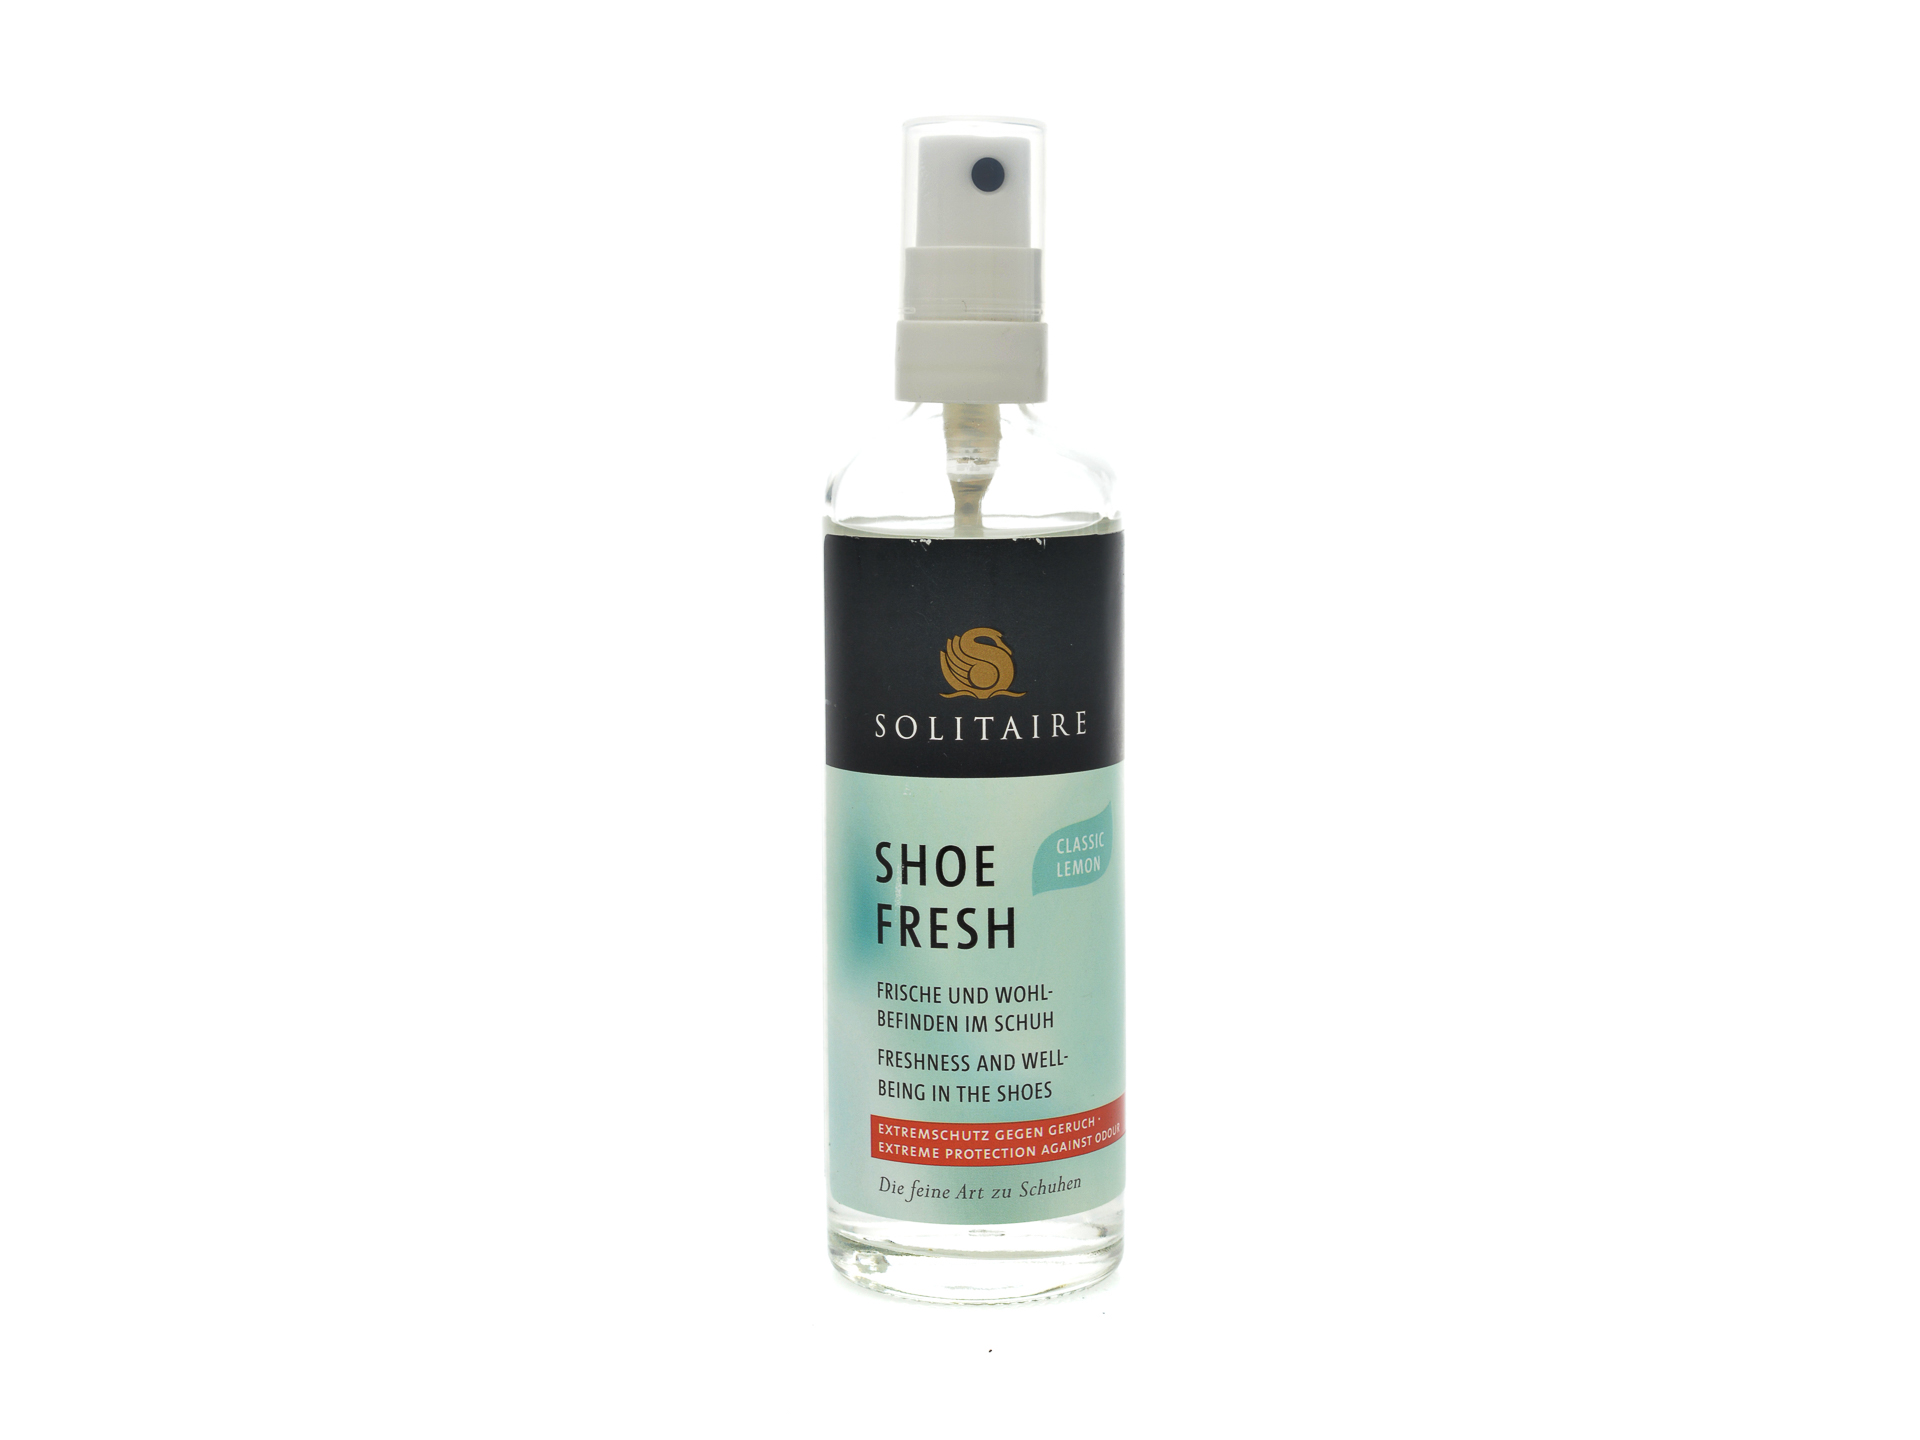 PR Spray pentru mentinerea mirosului placut in incaltaminte, Solitaire otter.ro